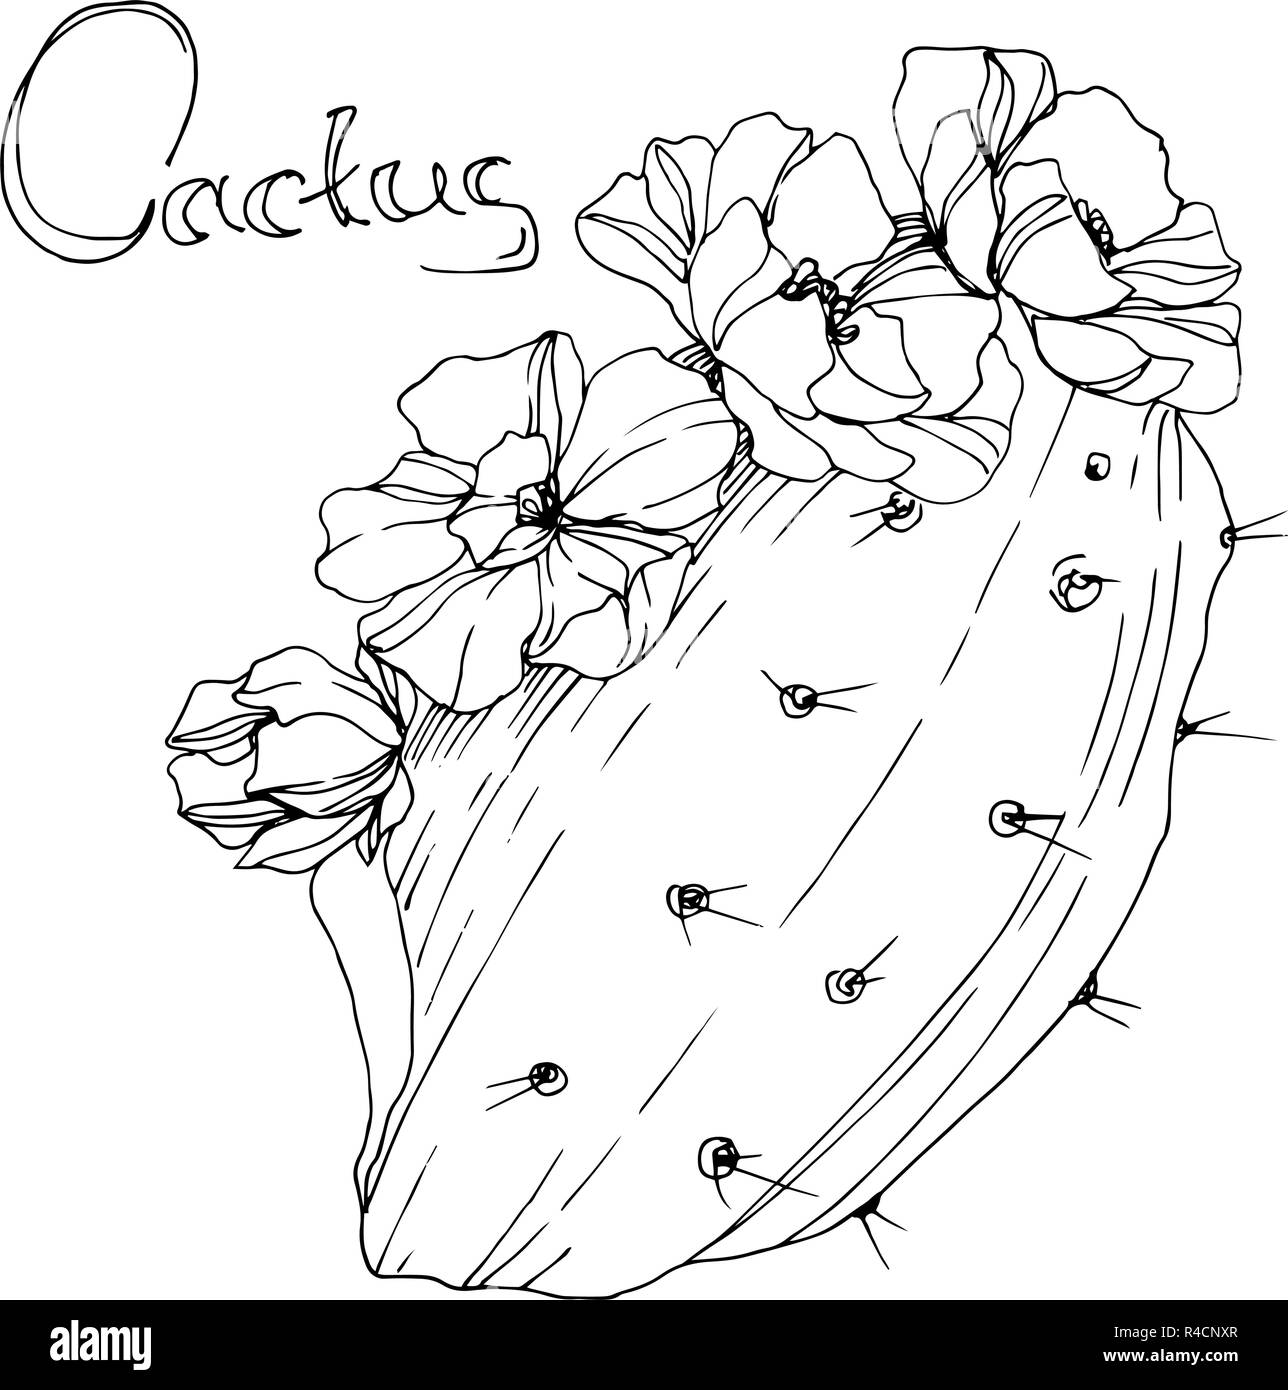 Chris Zack Tattoo  Cactus Flower Piece cactus cactustattoo flowers  flowertattoo baltimoretattooartist tattoo tattoodesert plur inspired  anastasiazack  Facebook